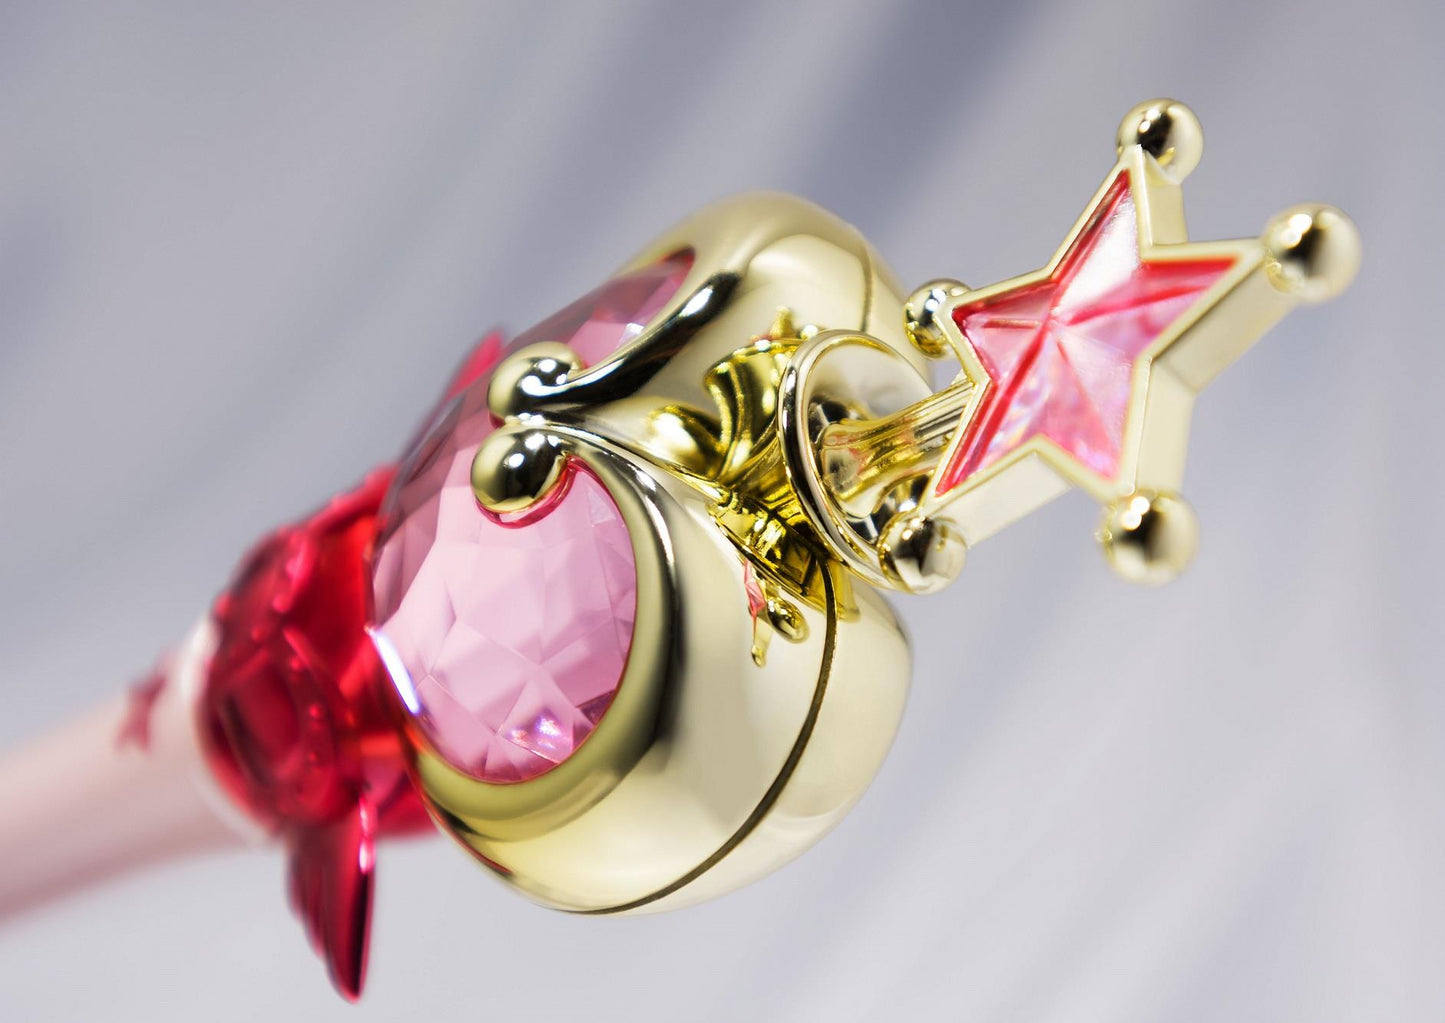 Sailor Moon: Pink Moon Stick Proplica